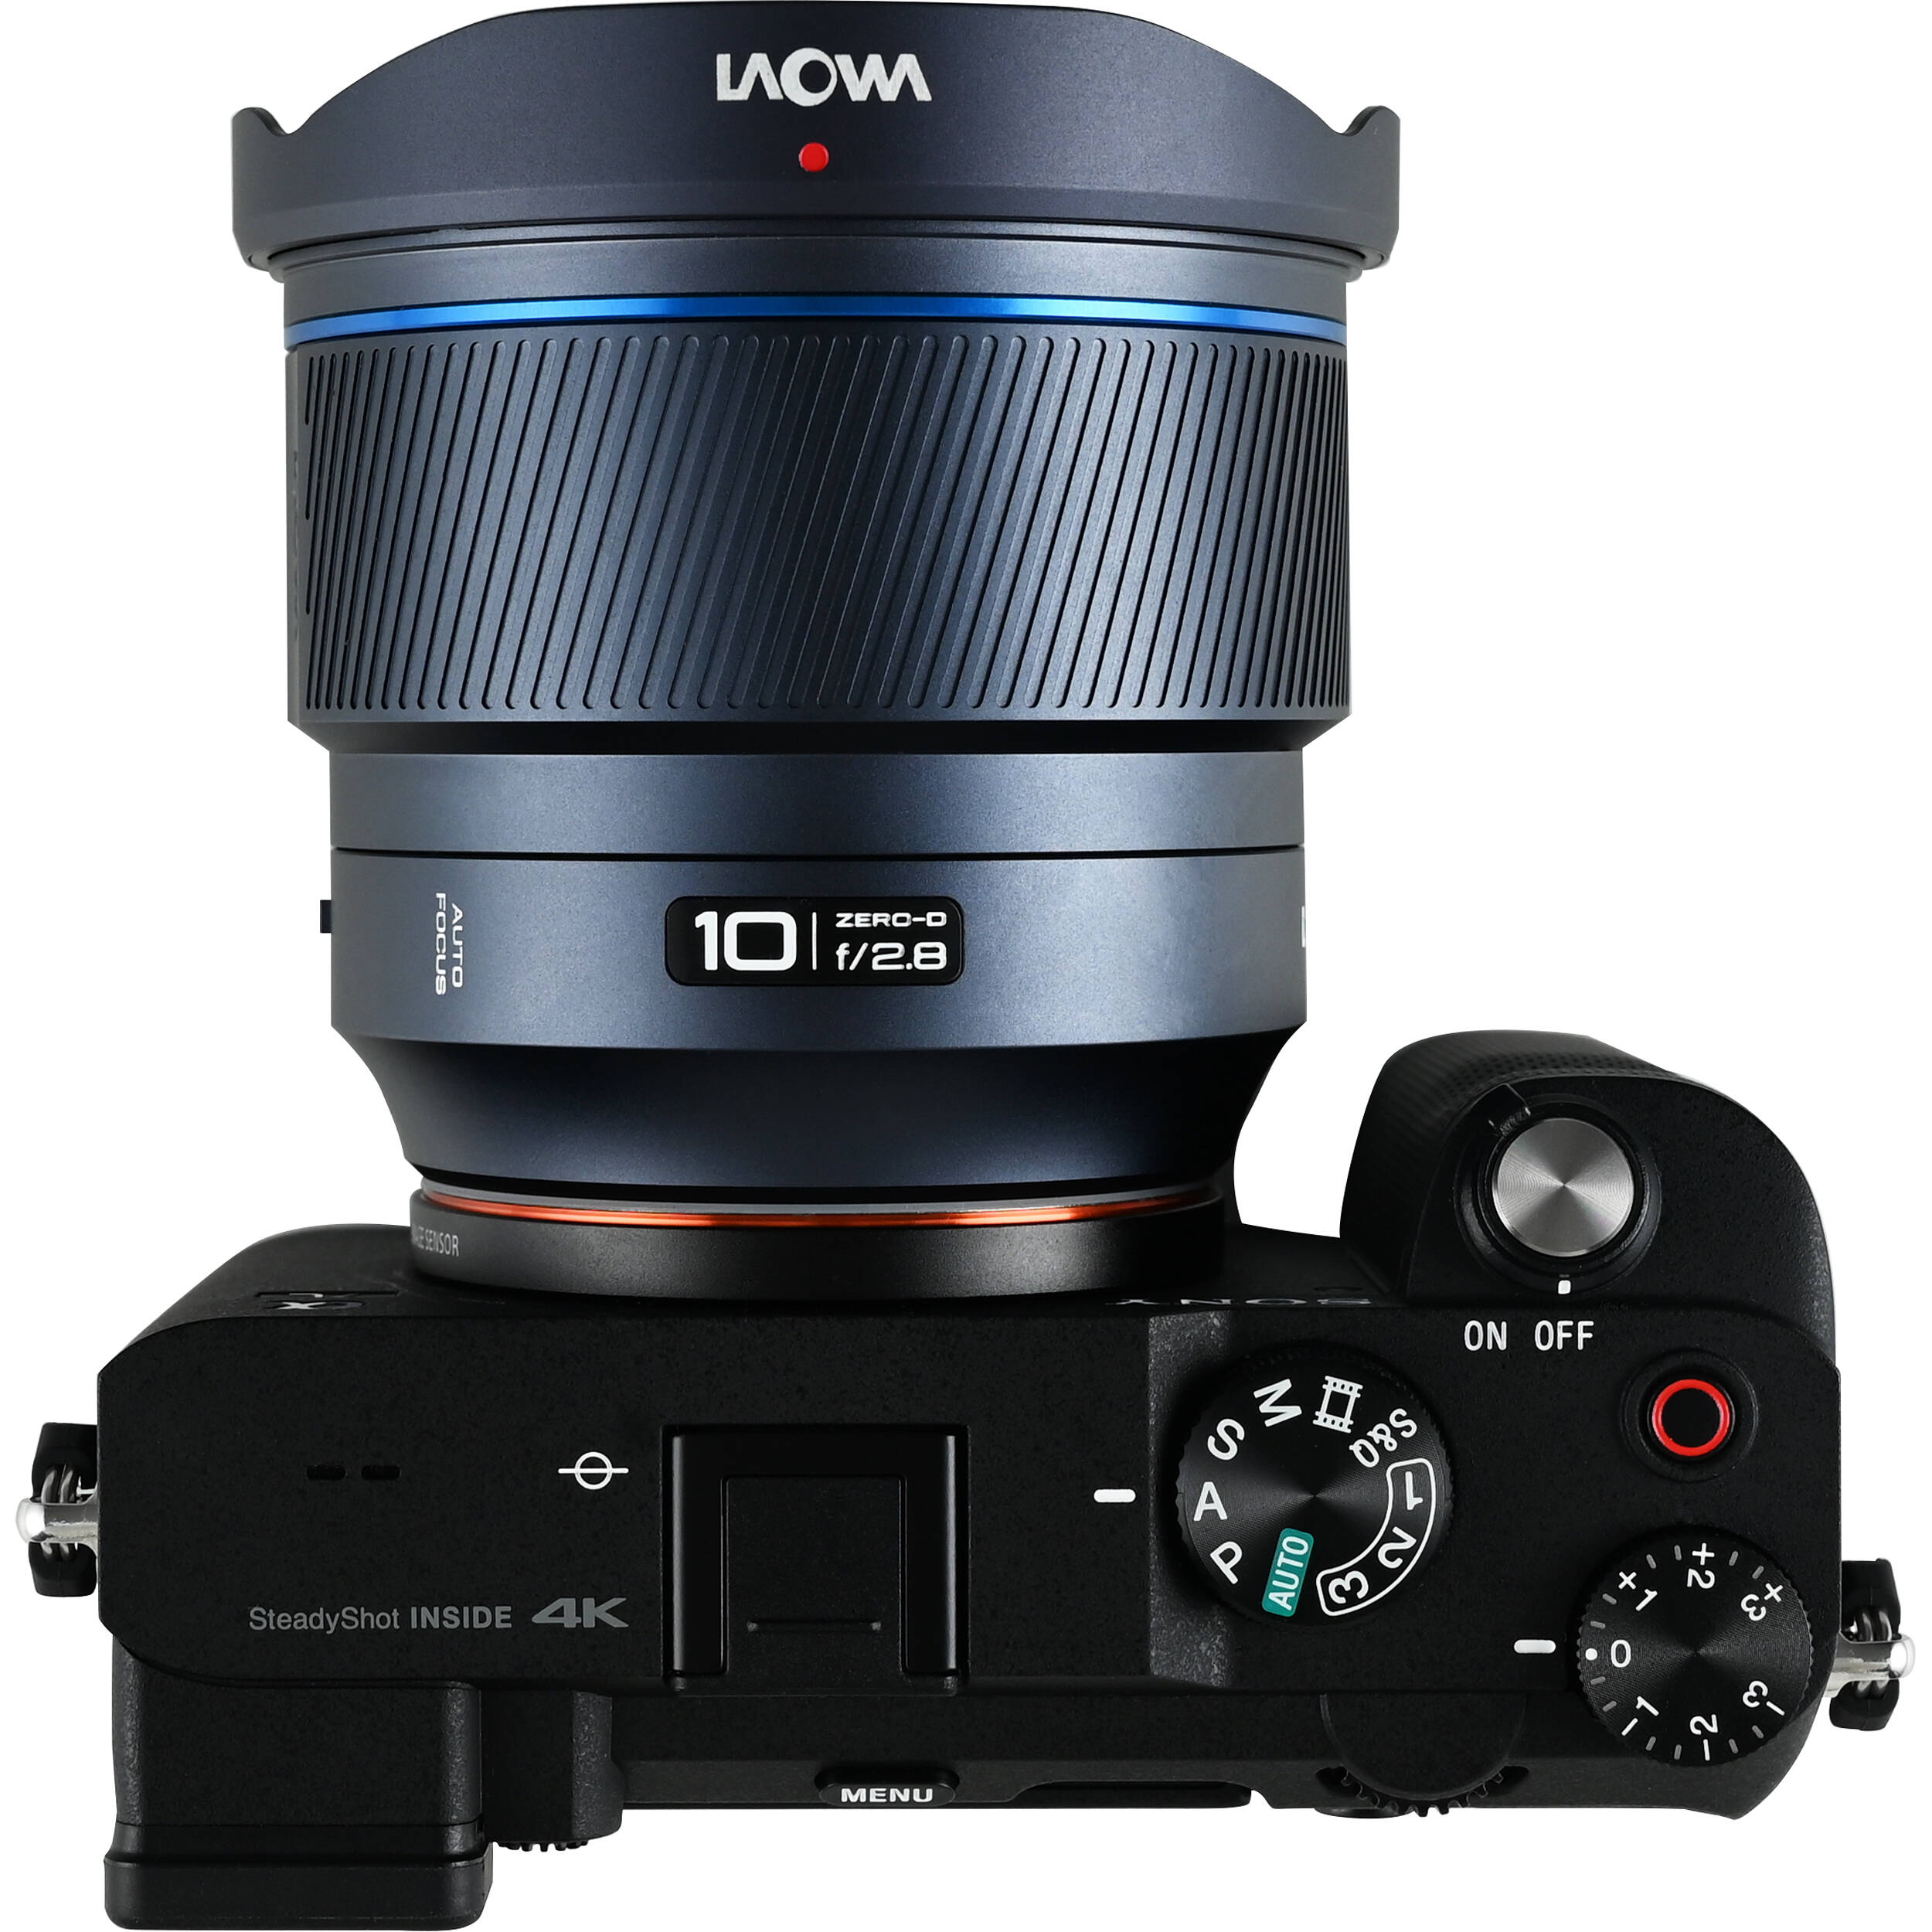 Venus Optics Laowa 10mm f/2.8 Zero-D FF Autofocus Lens - Sony E mount